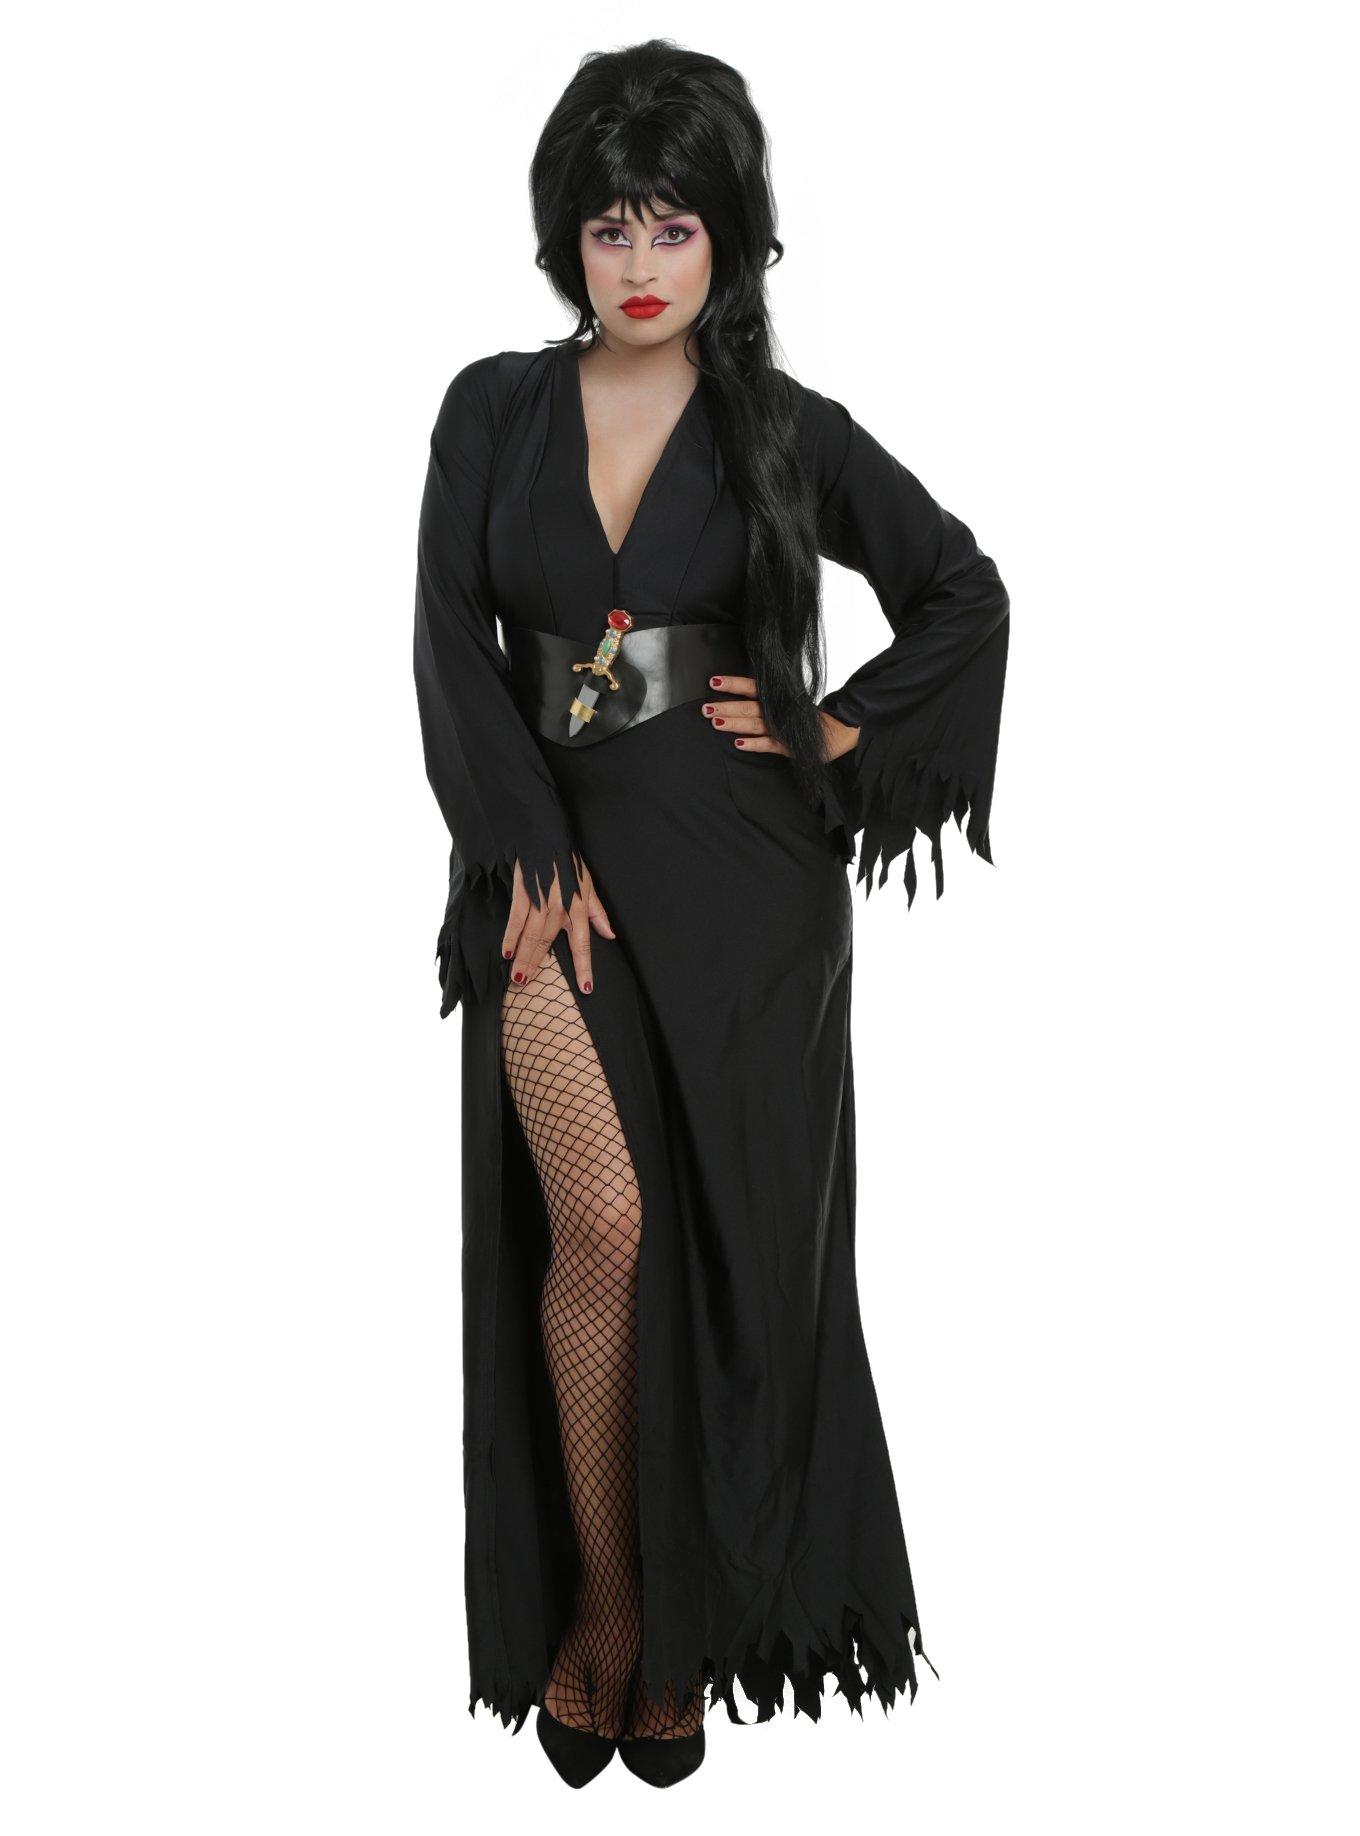 Elvira Costume Plus Size Hot Topic